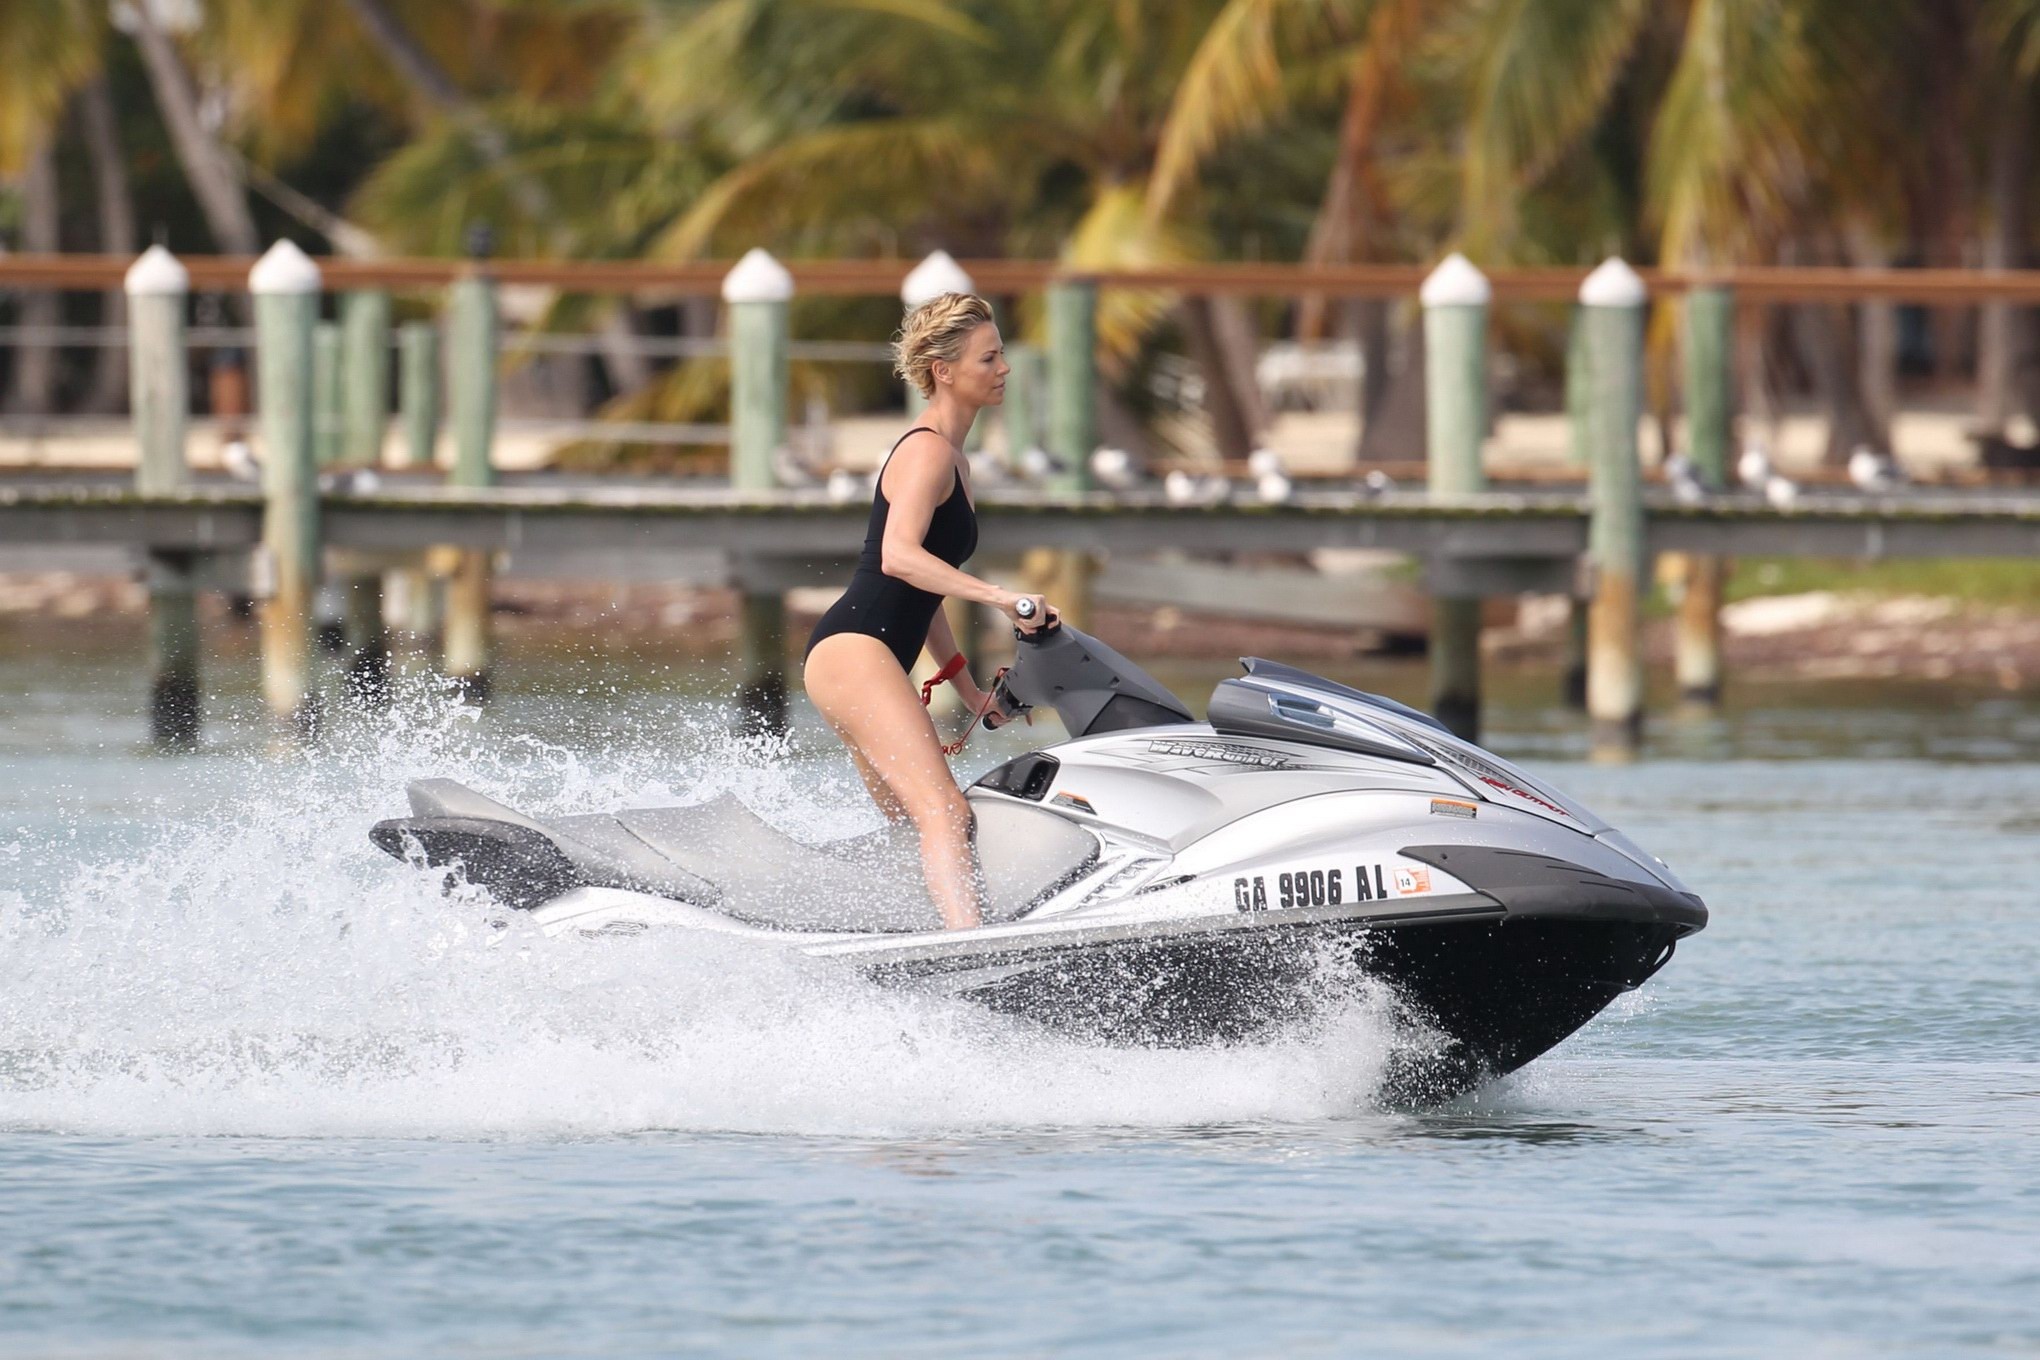 Charlize Theron jet skiing in black monokini during the photoshoot in Miami Beac #75201303